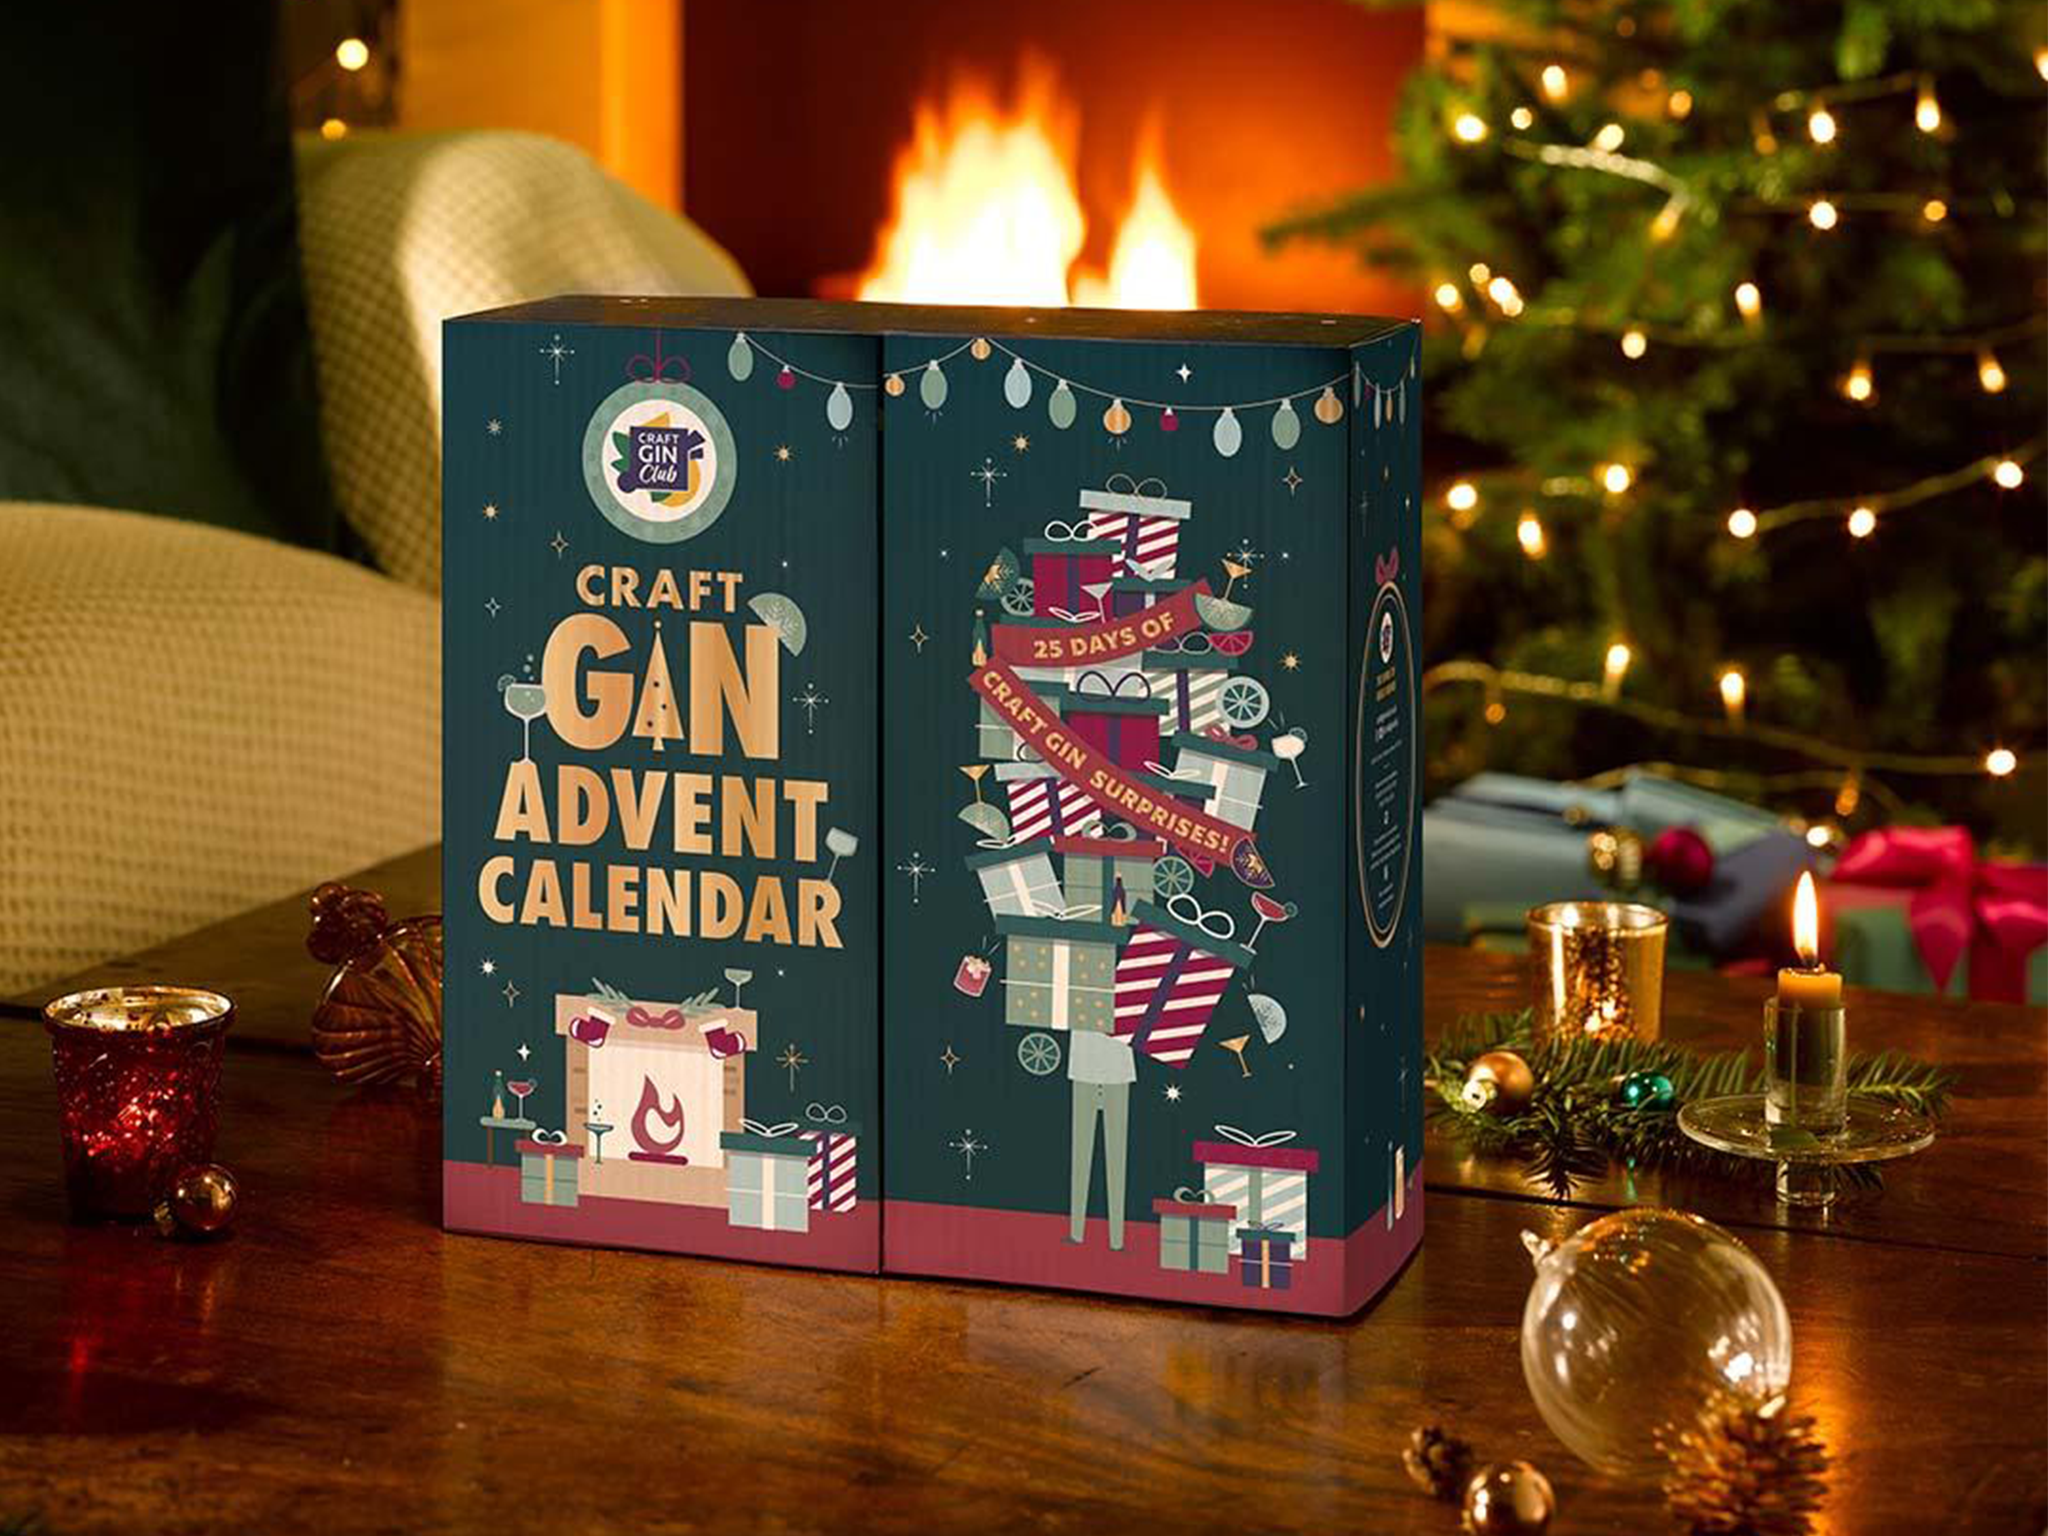 Craft Gin Club craft gin advent calendar